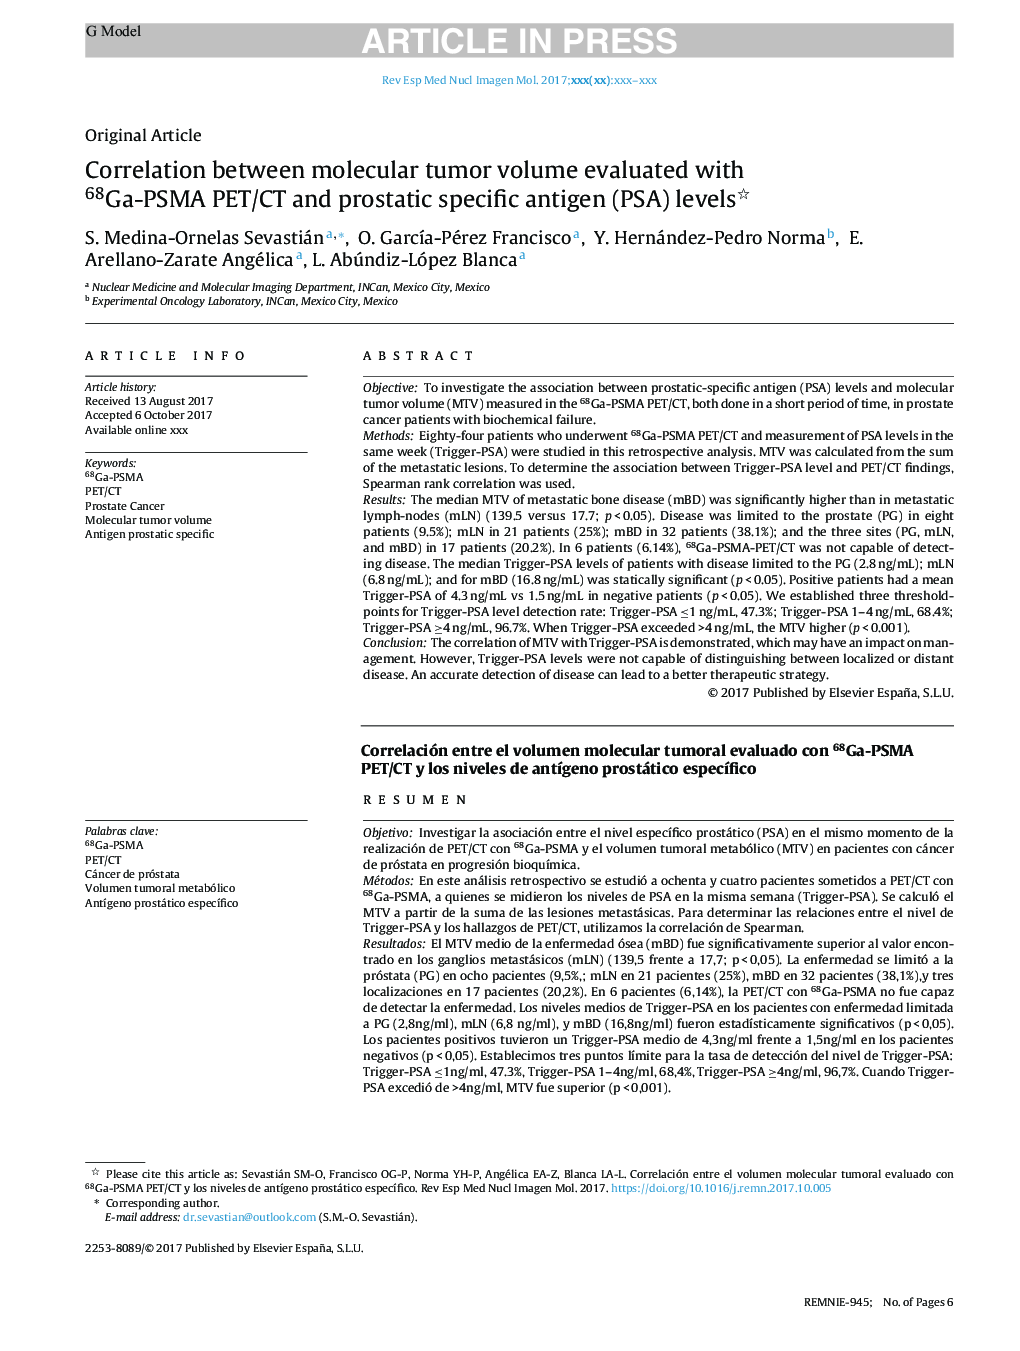 Correlation between molecular tumor volume evaluated with 68Ga-PSMA PET/CT and prostatic specific antigen (PSA) levels